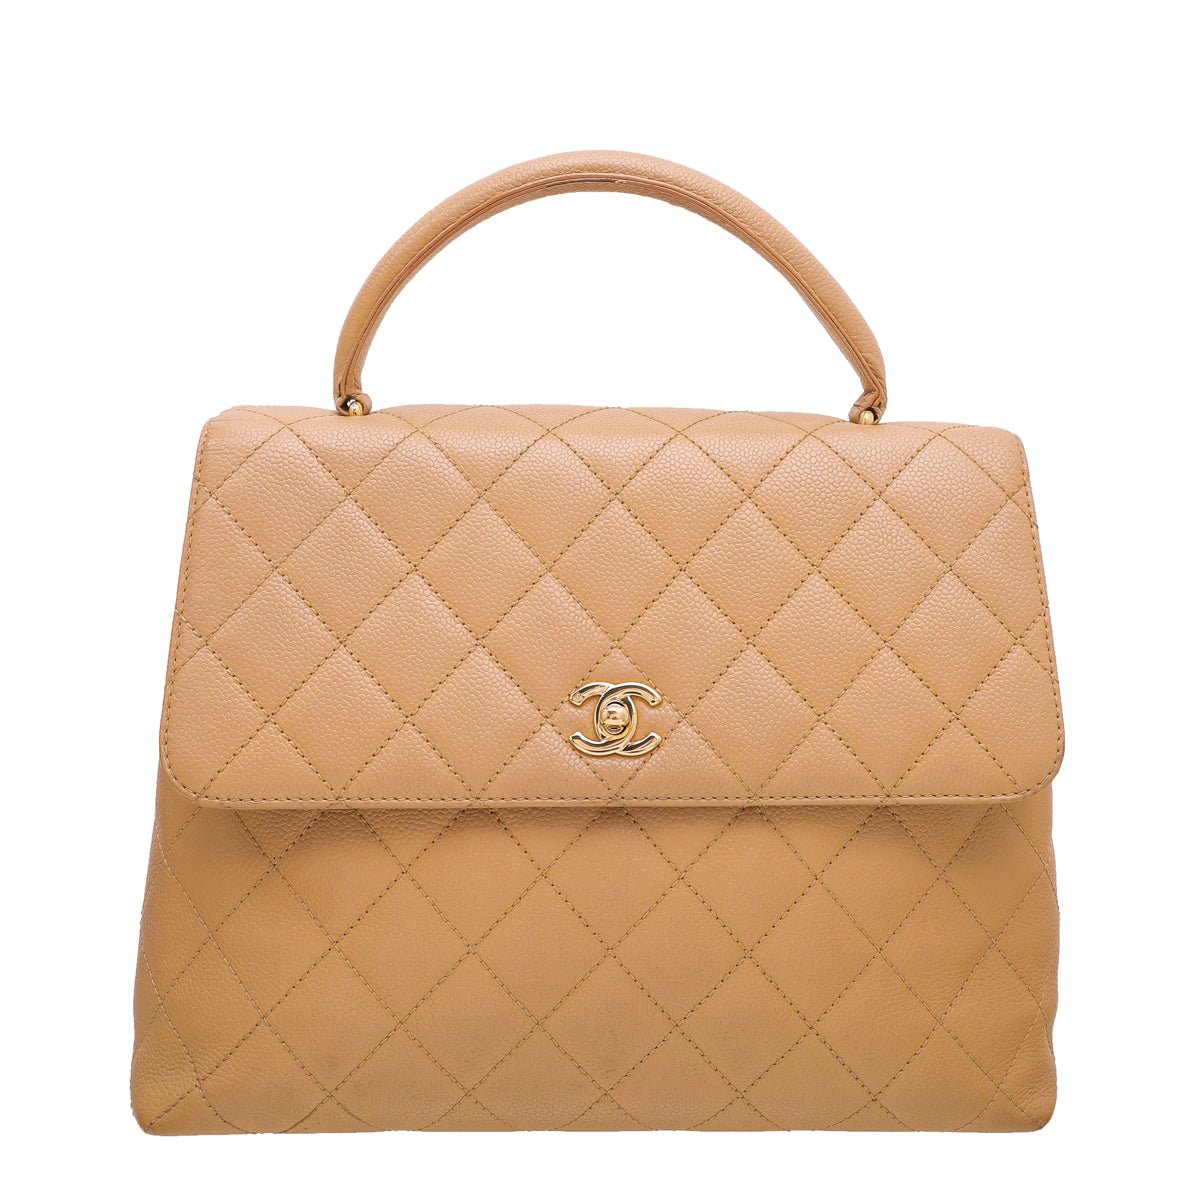 The Closet - Chanel Beige Kelly Flap Top Handle Bag | The Closet